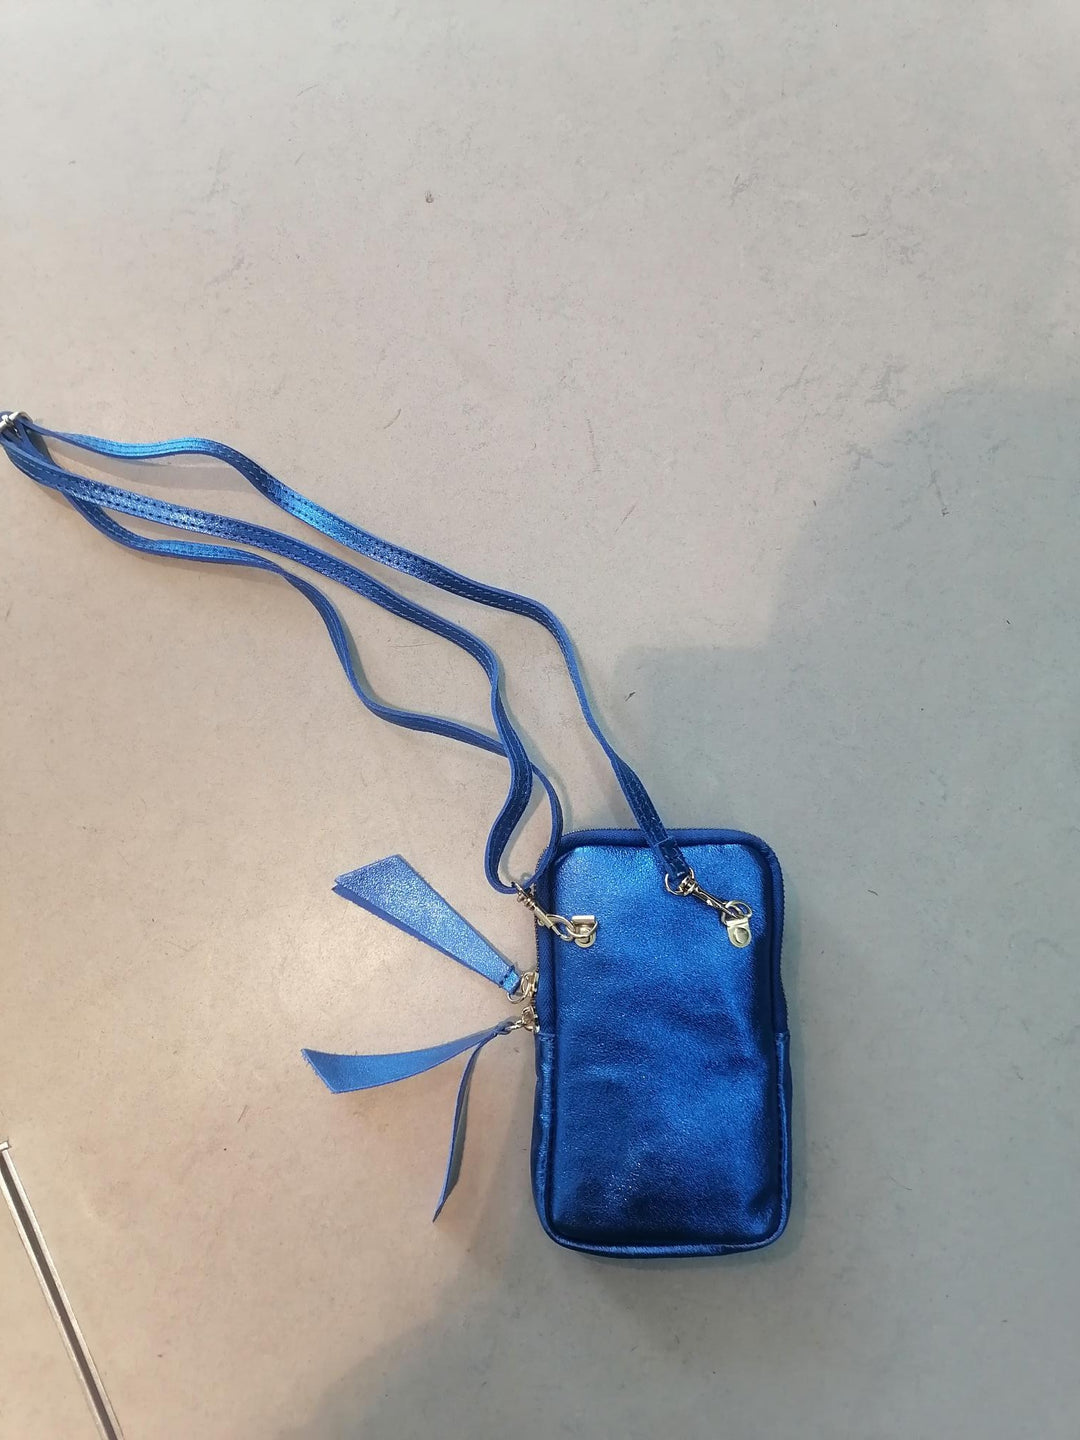 Mini blauwe metallic crossbody tas van leder - axent - ITA003-shiny-blauw - grote maten - dameskleding - kledingwinkel - herent - leuven